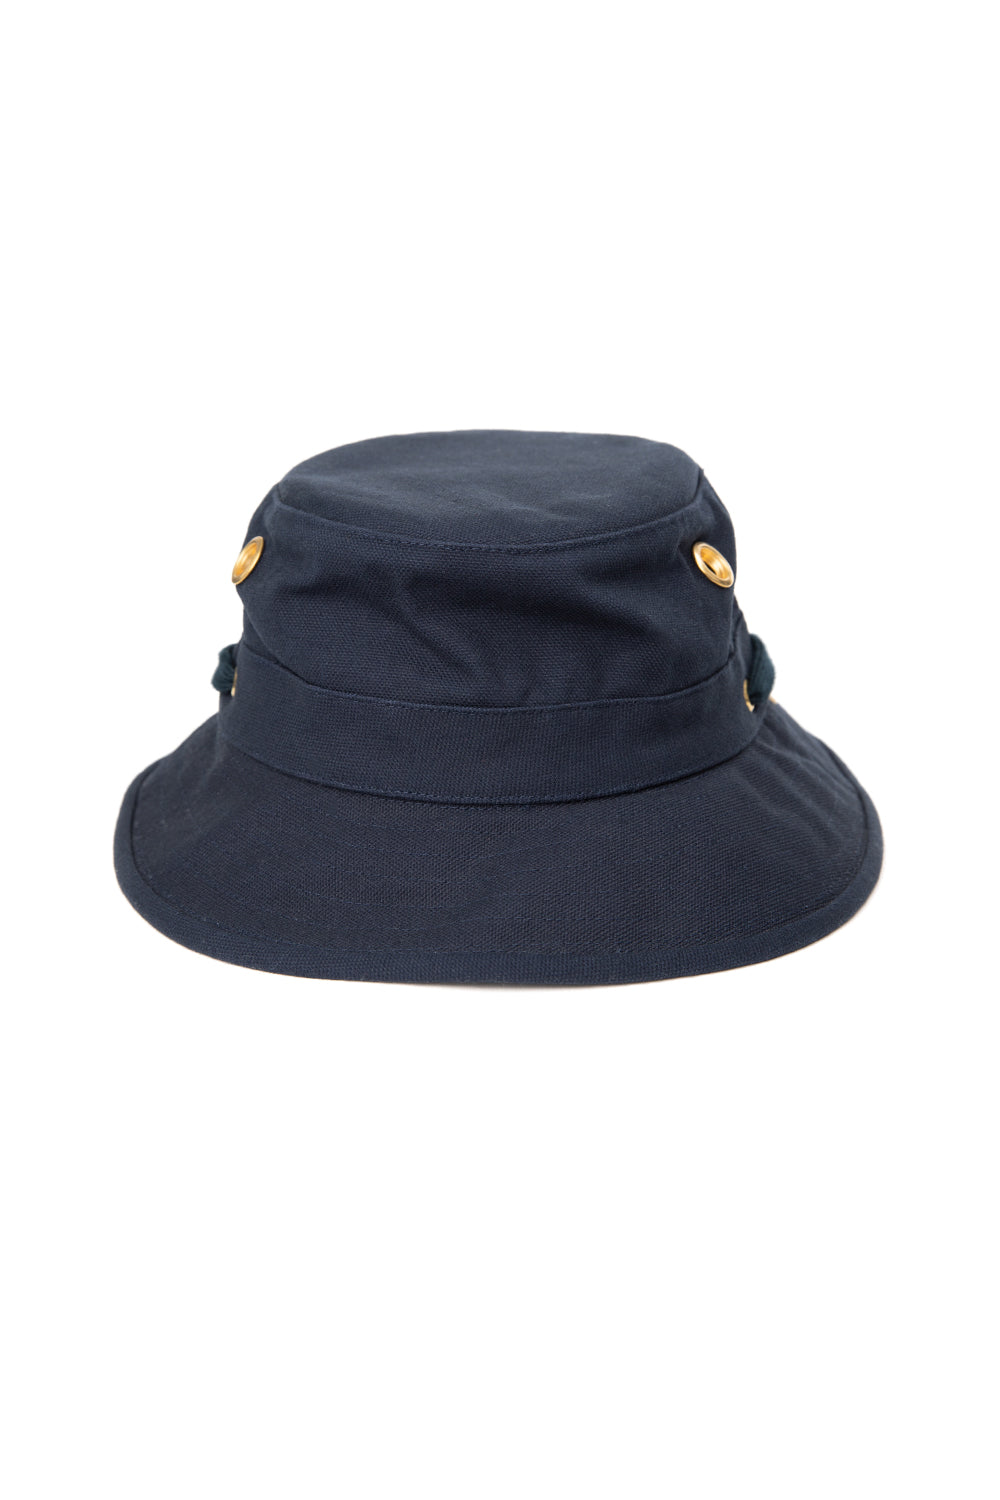 Tilley-The-Iconic-T1-Bucket-Hat-Dark-Navy